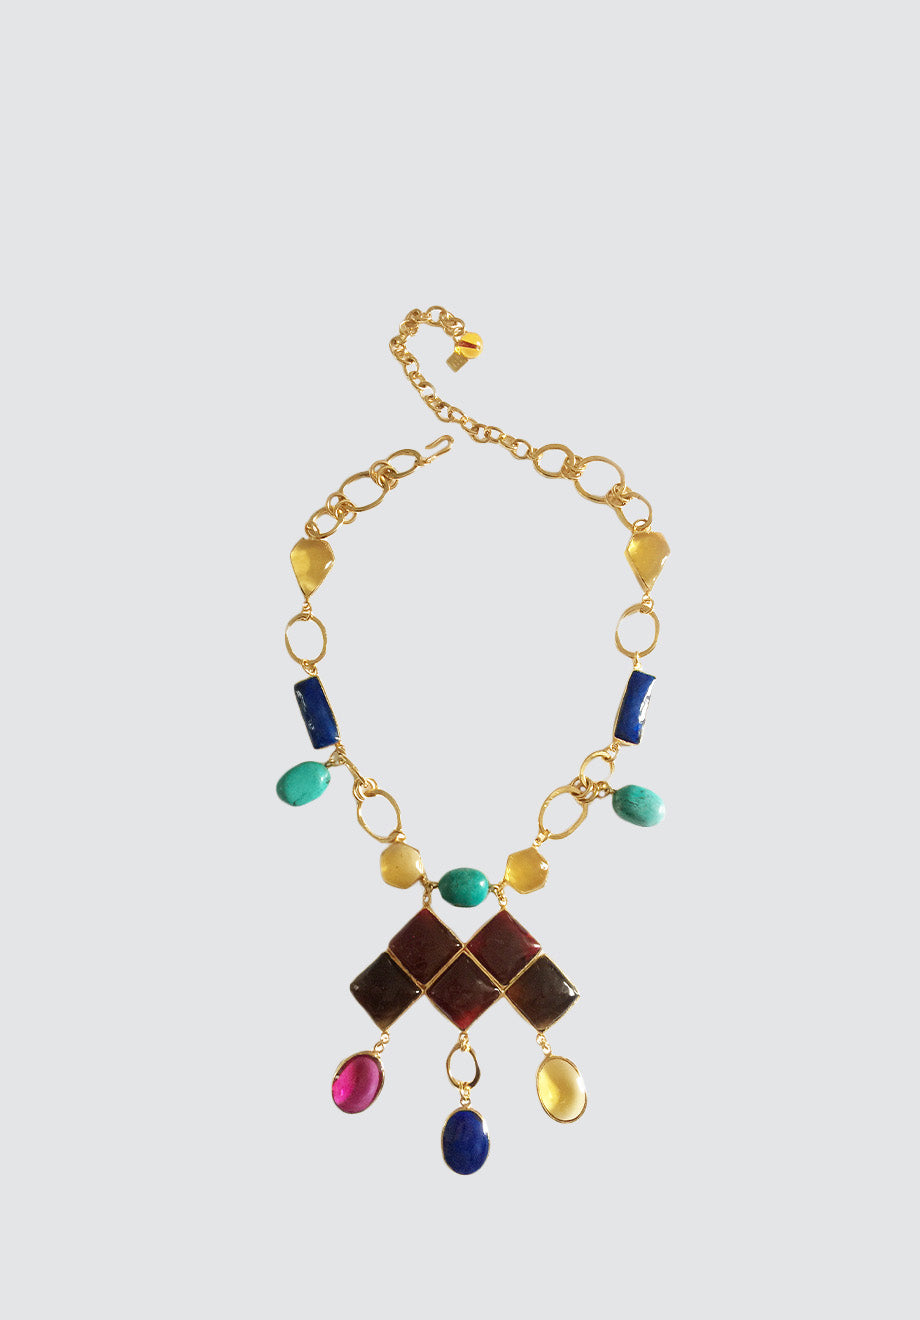 Berber Necklace